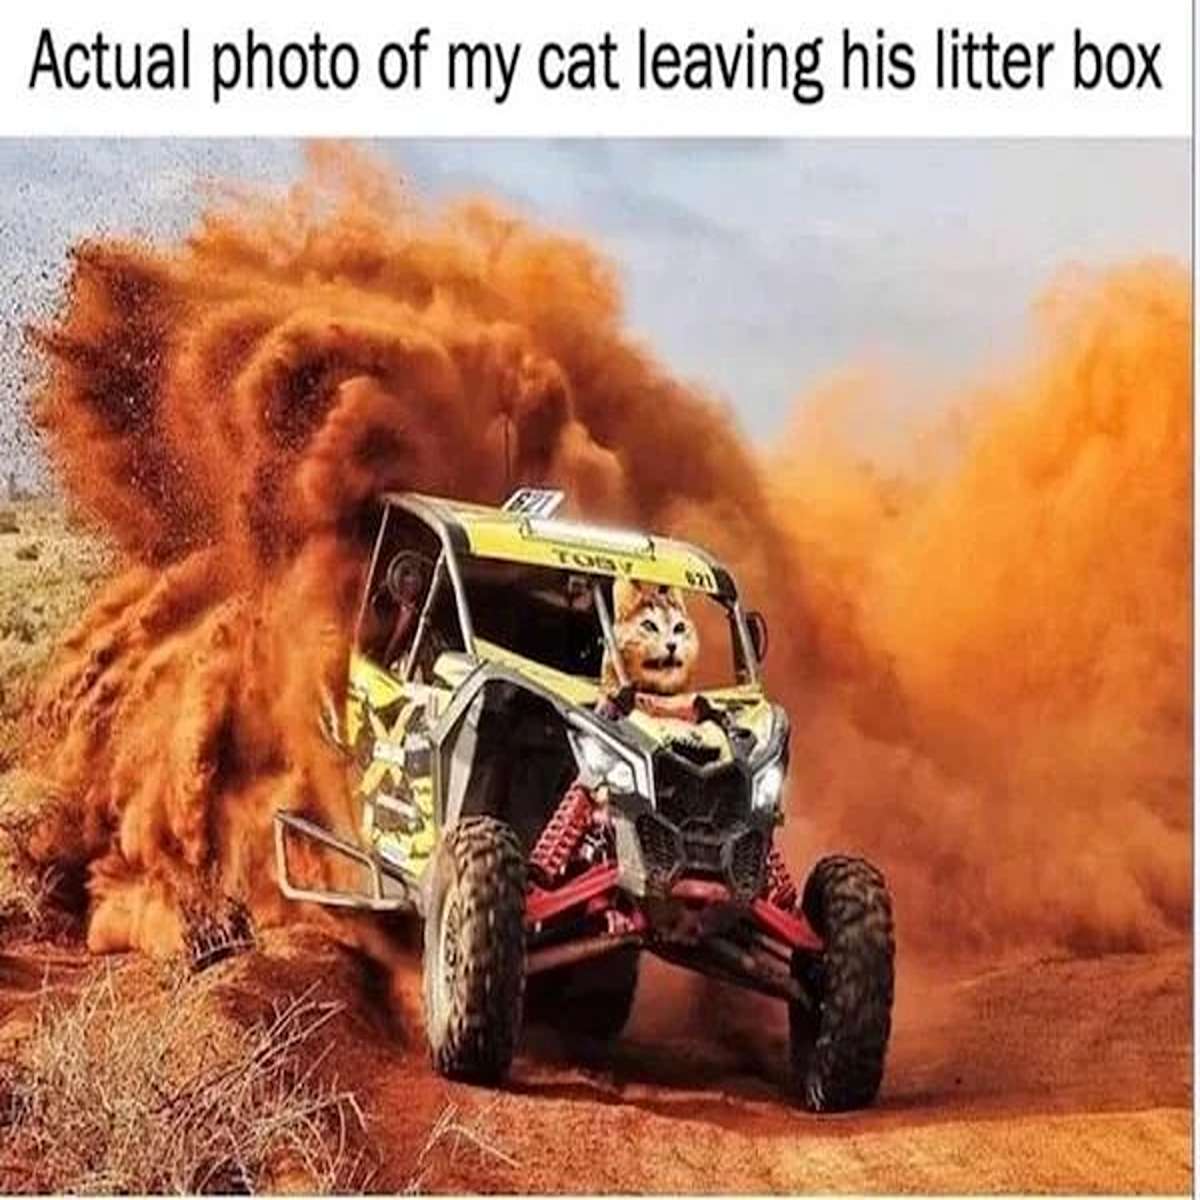 dank memes - my cat leaving the litter box meme - Actual photo of my cat leaving his litter box Toby